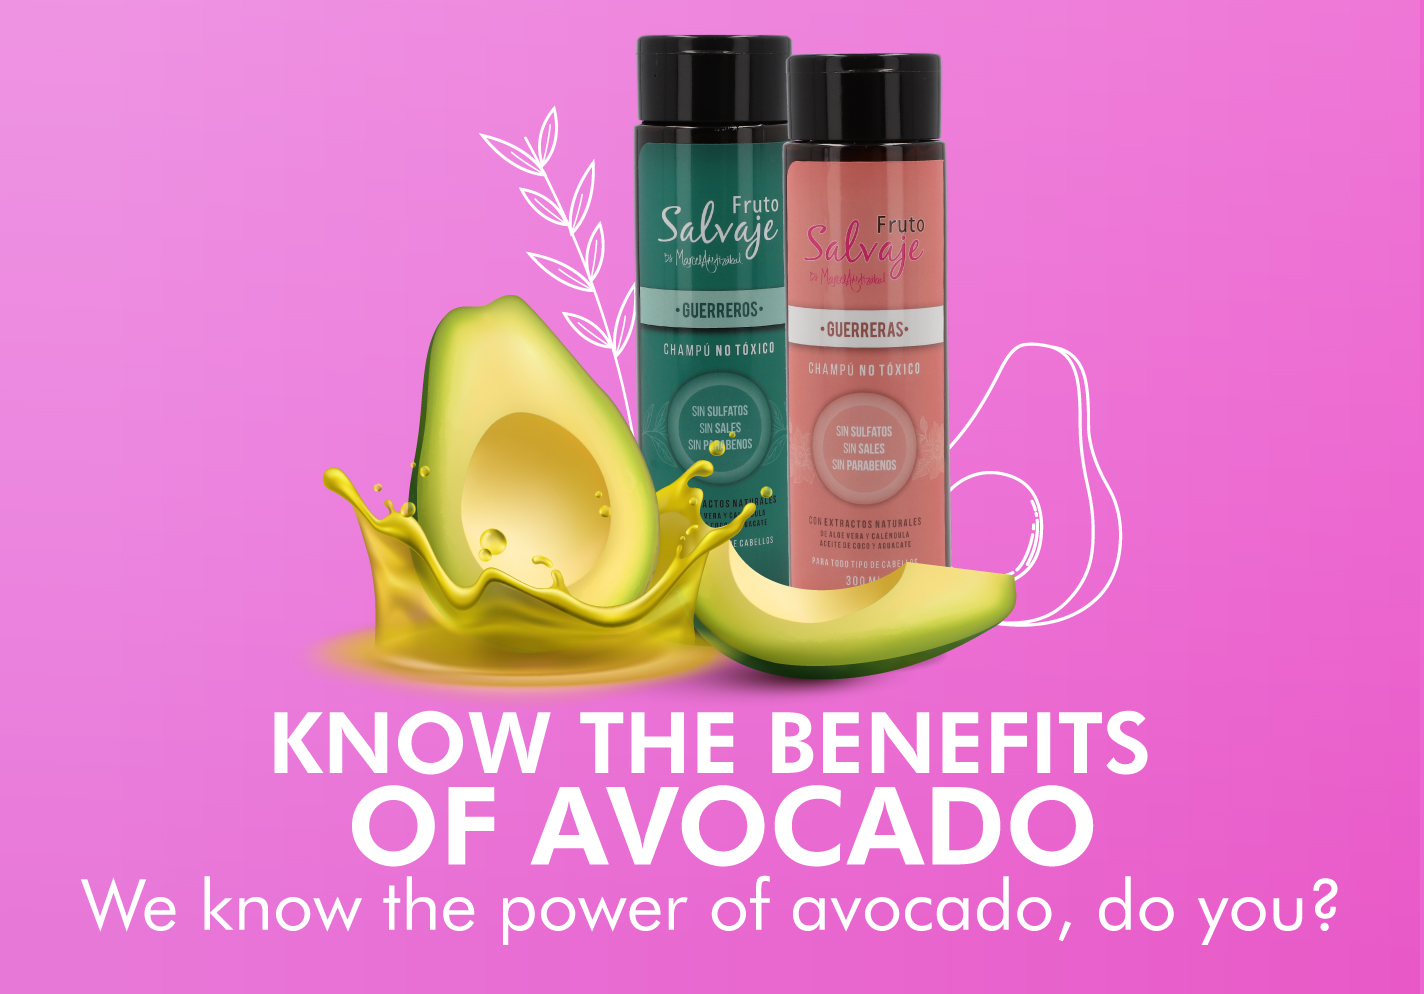 Shampoo jars and image of an avocado